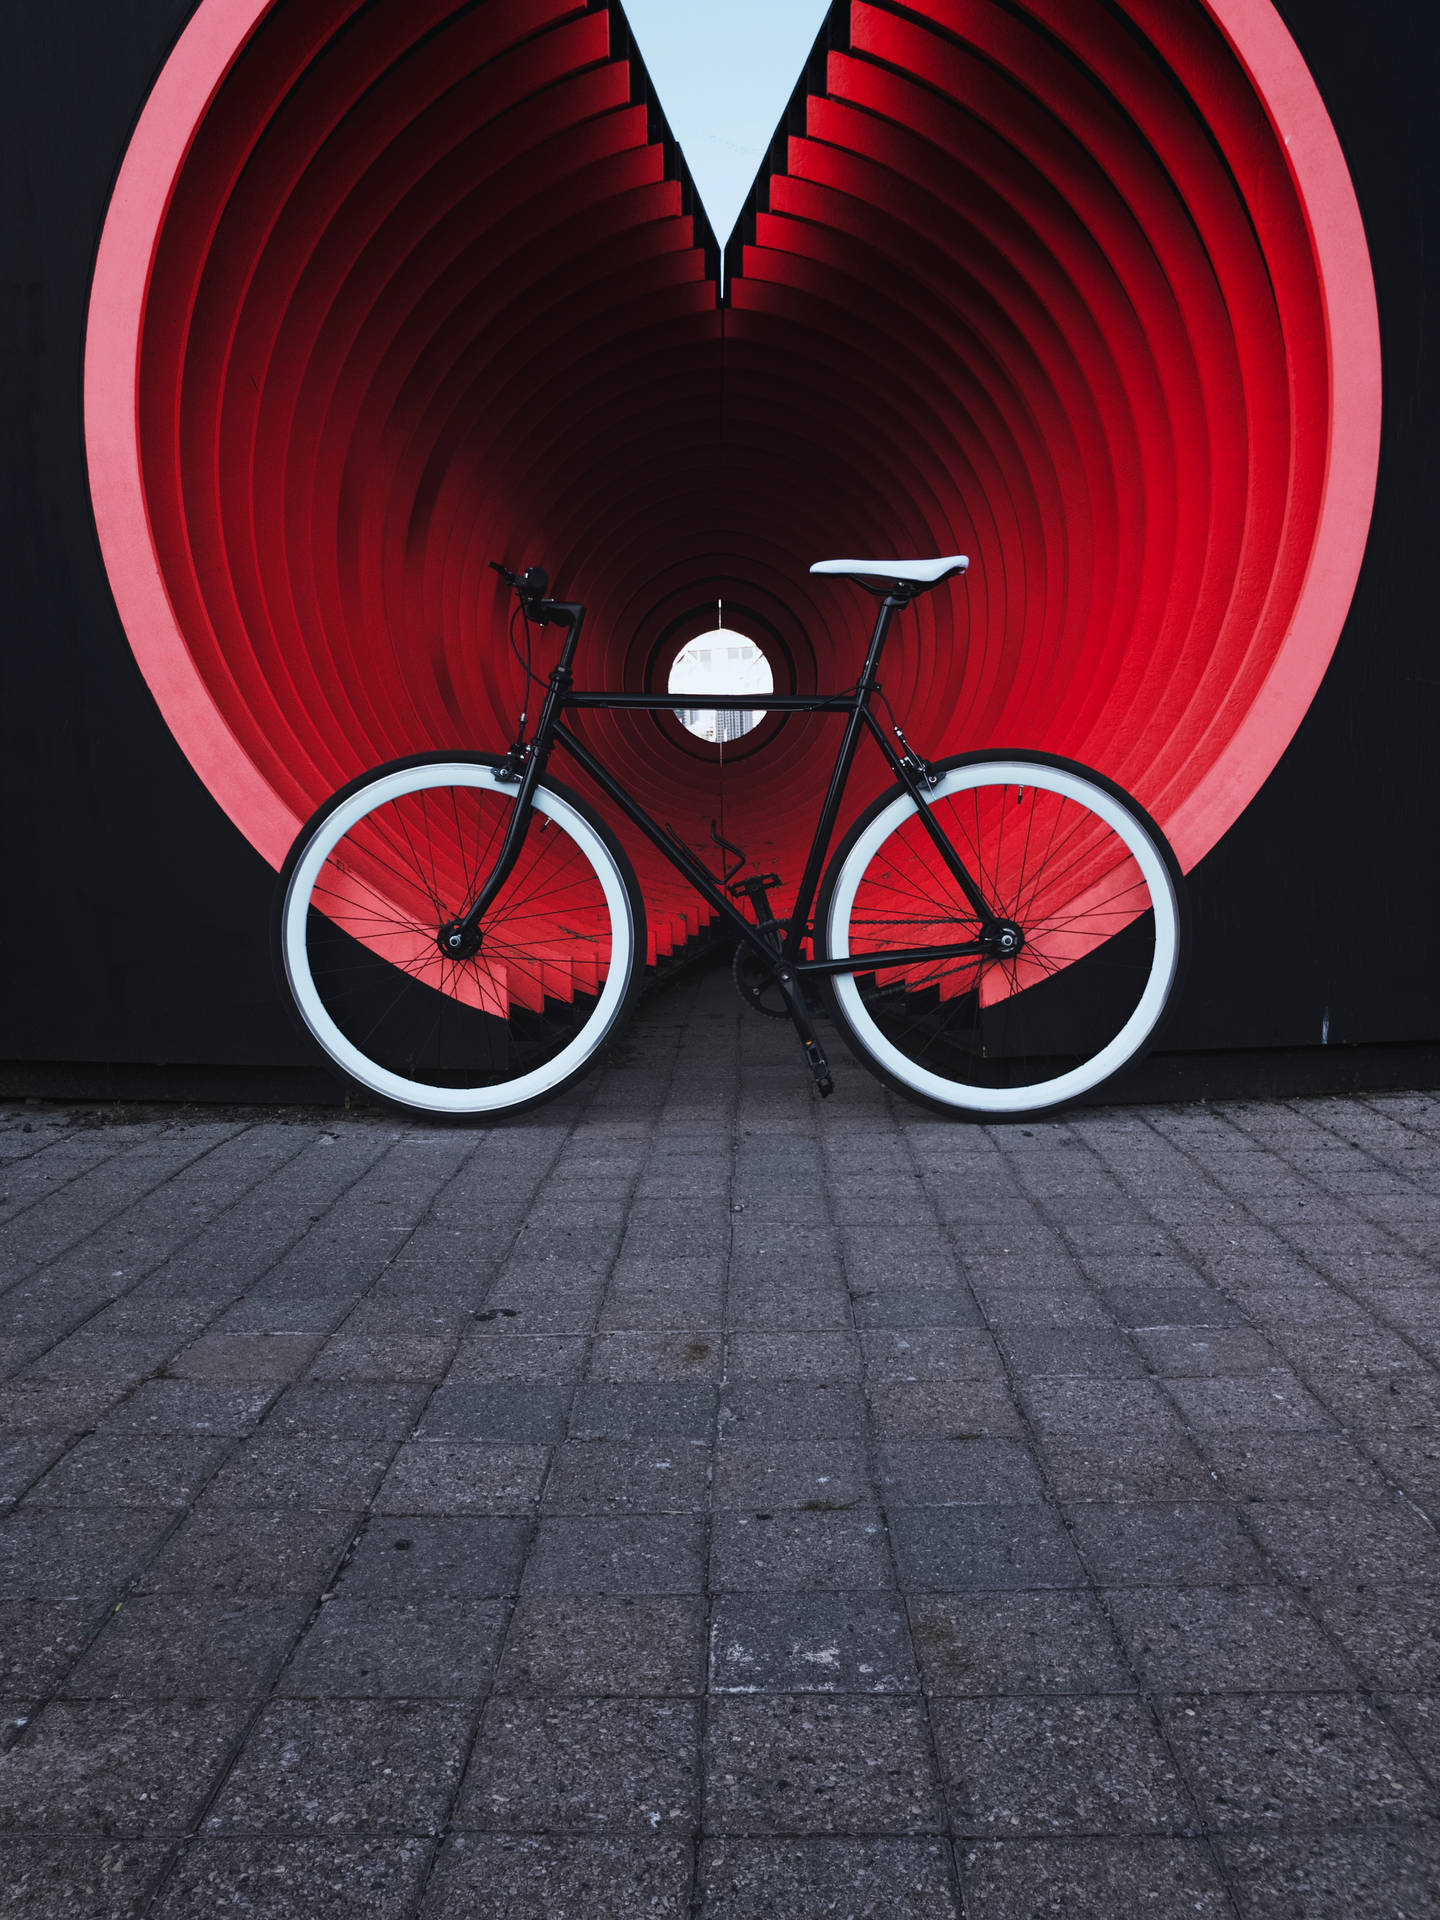 Bike Wallpaper Images